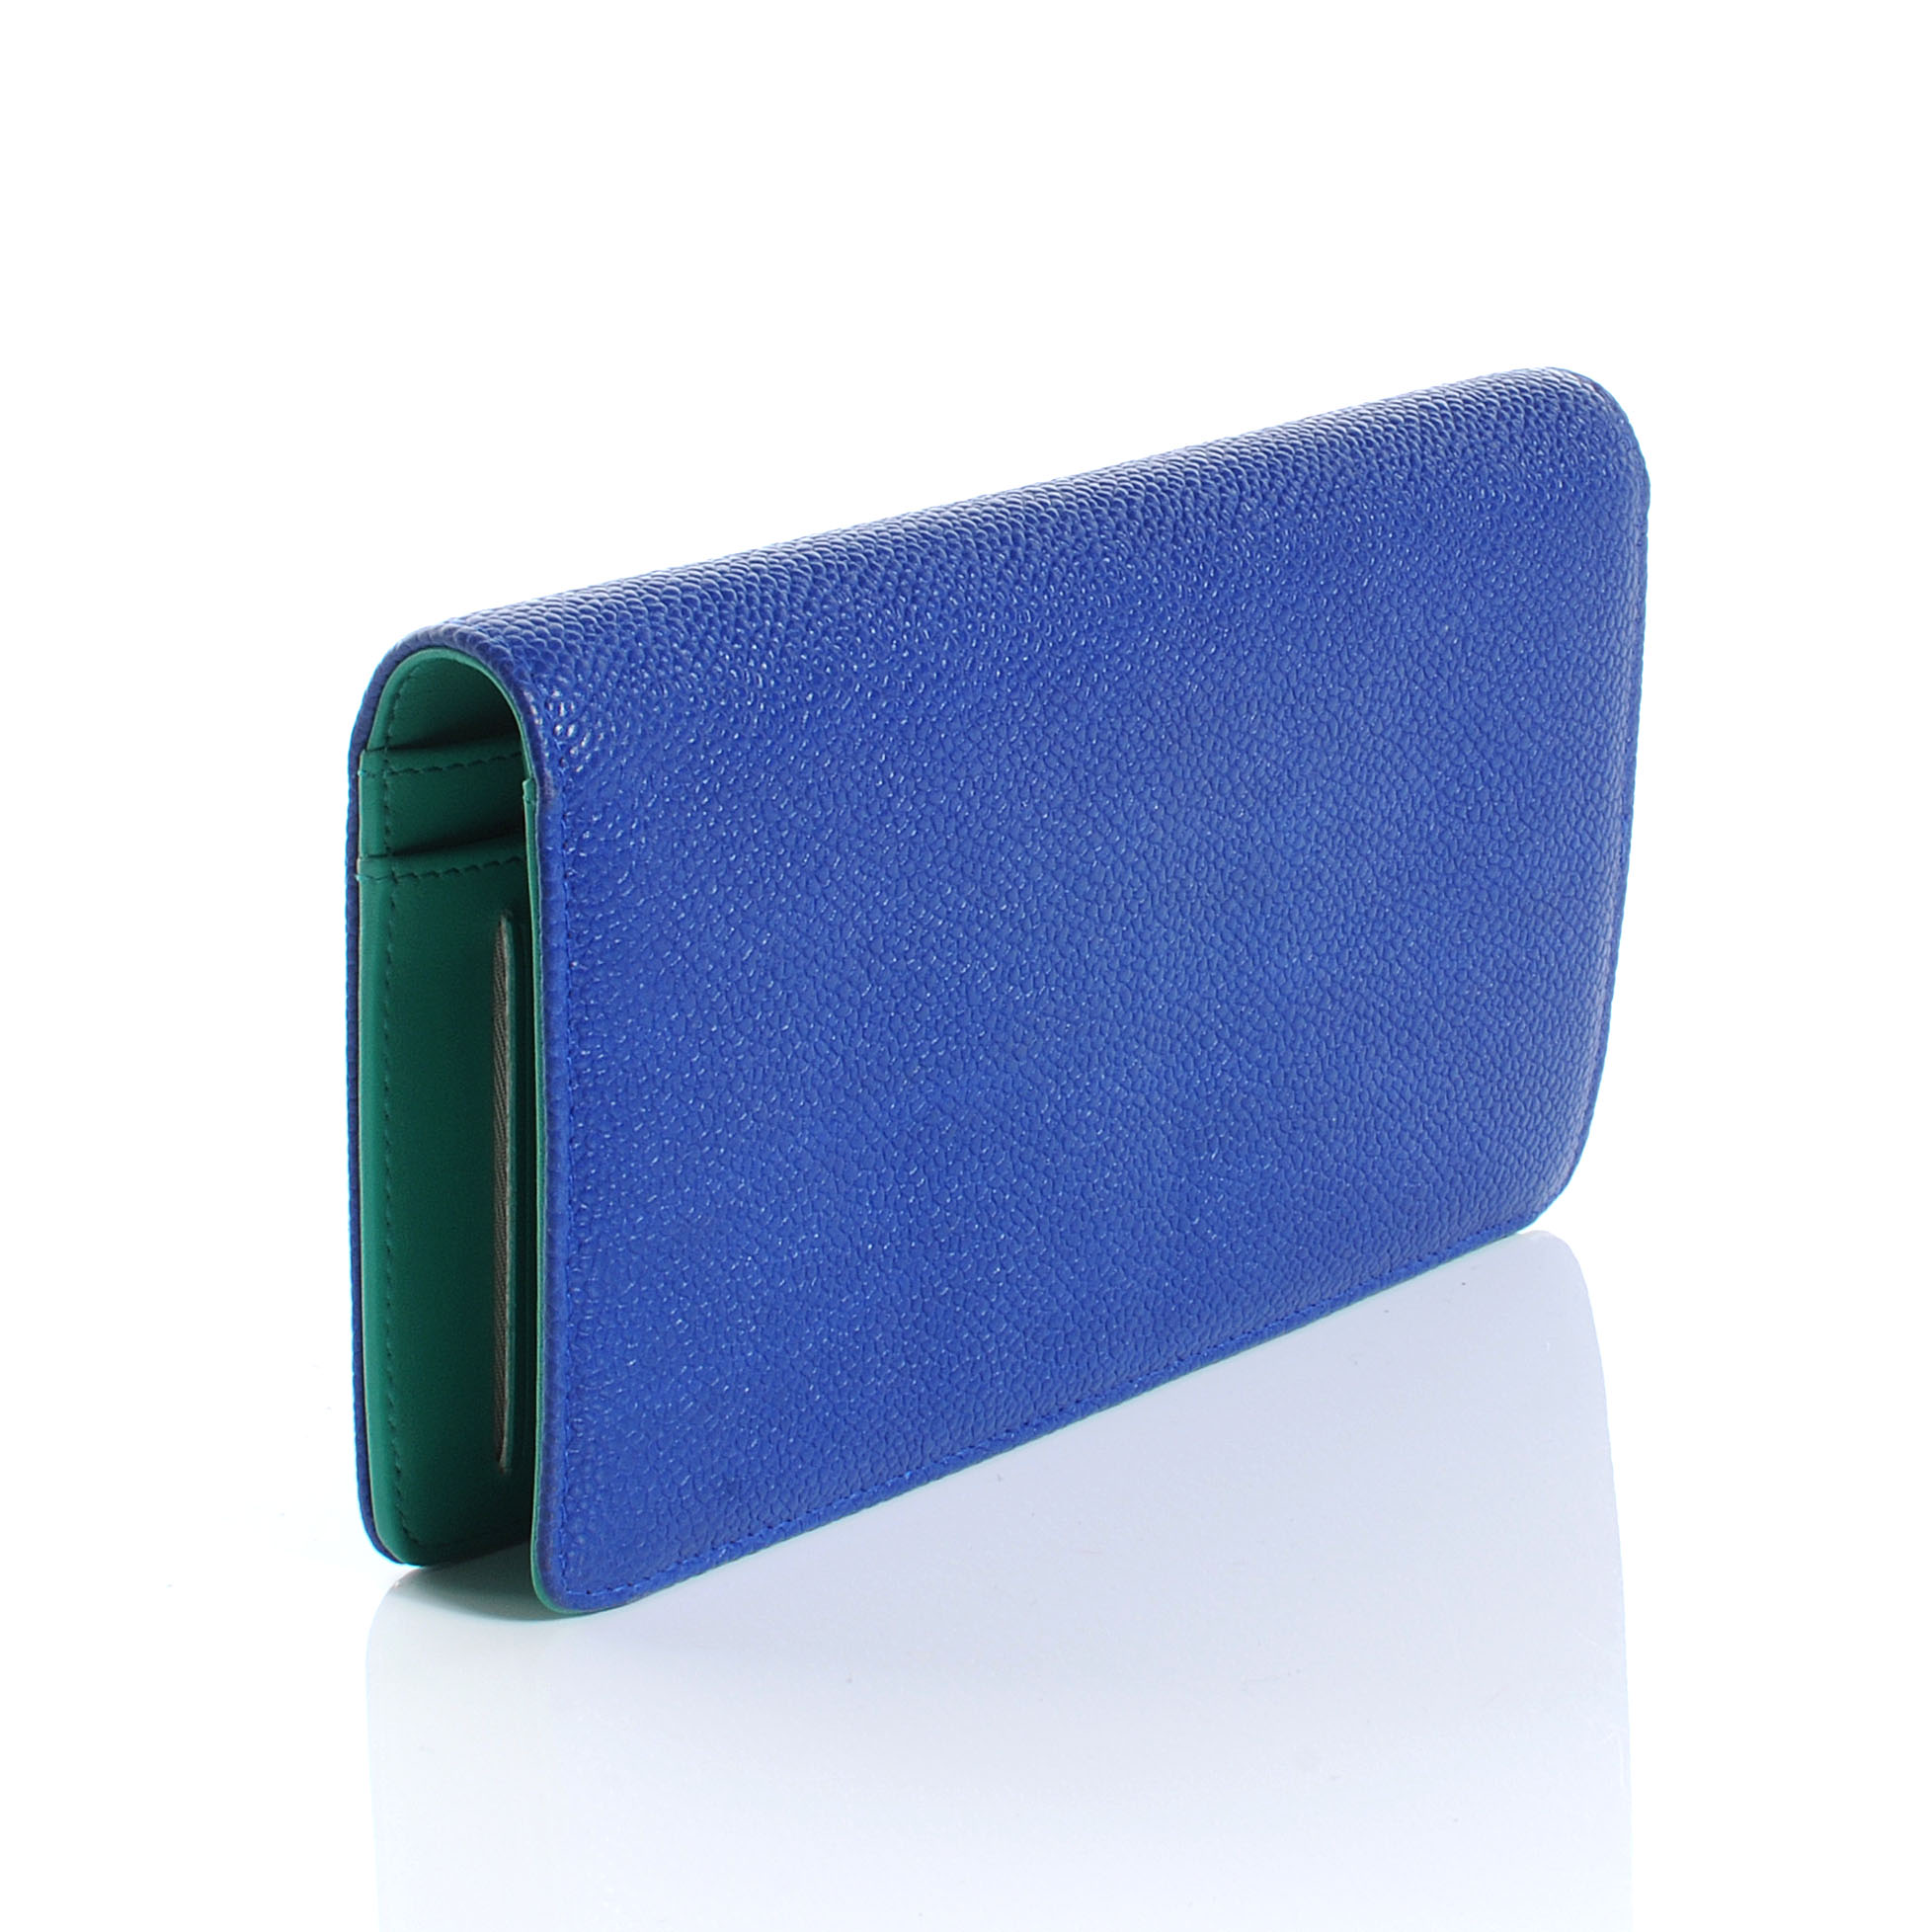 CHANEL Caviar Yen Wallet Bi-Color Blue and Green 56401 | FASHIONPHILE